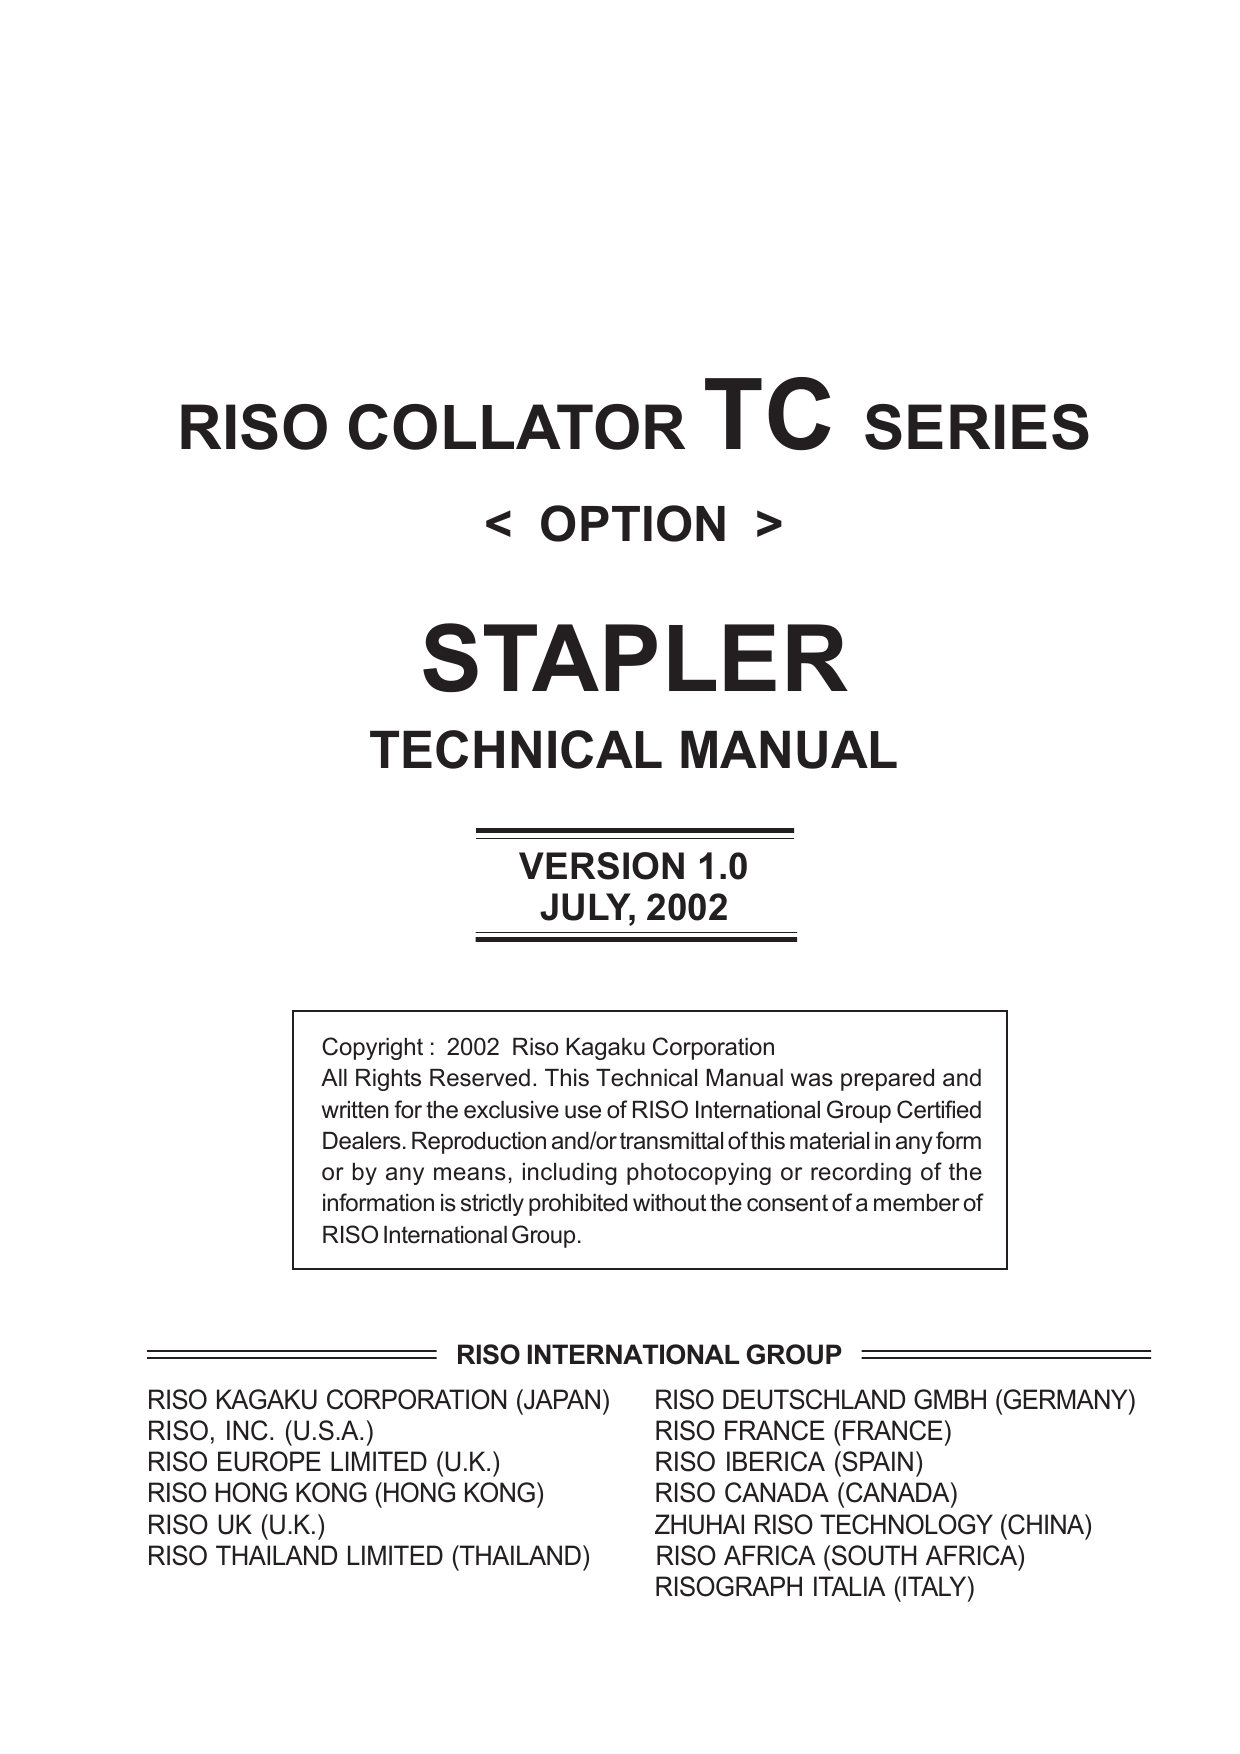 RISO TC 5100 Stapler-Option TECHNICAL Service Manual-1